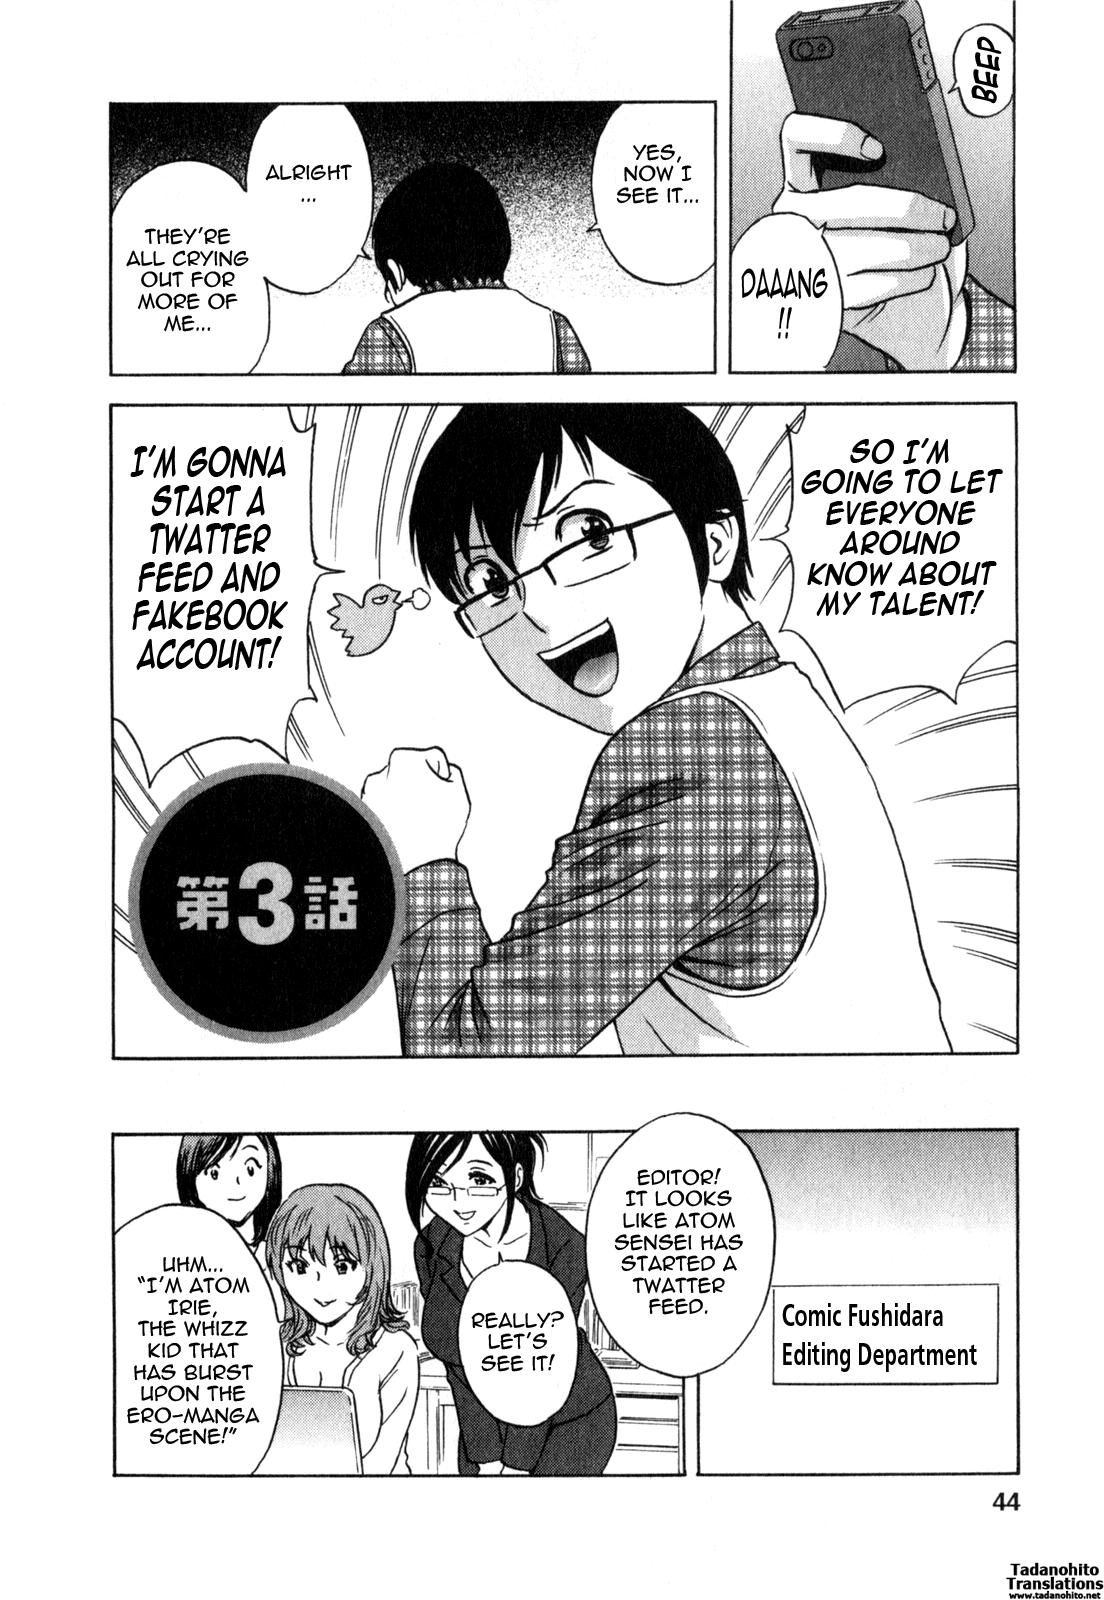 [Hidemaru] Life with Married Women Just Like a Manga 3 - Ch. 1-6 [English] {Tadanohito} 47